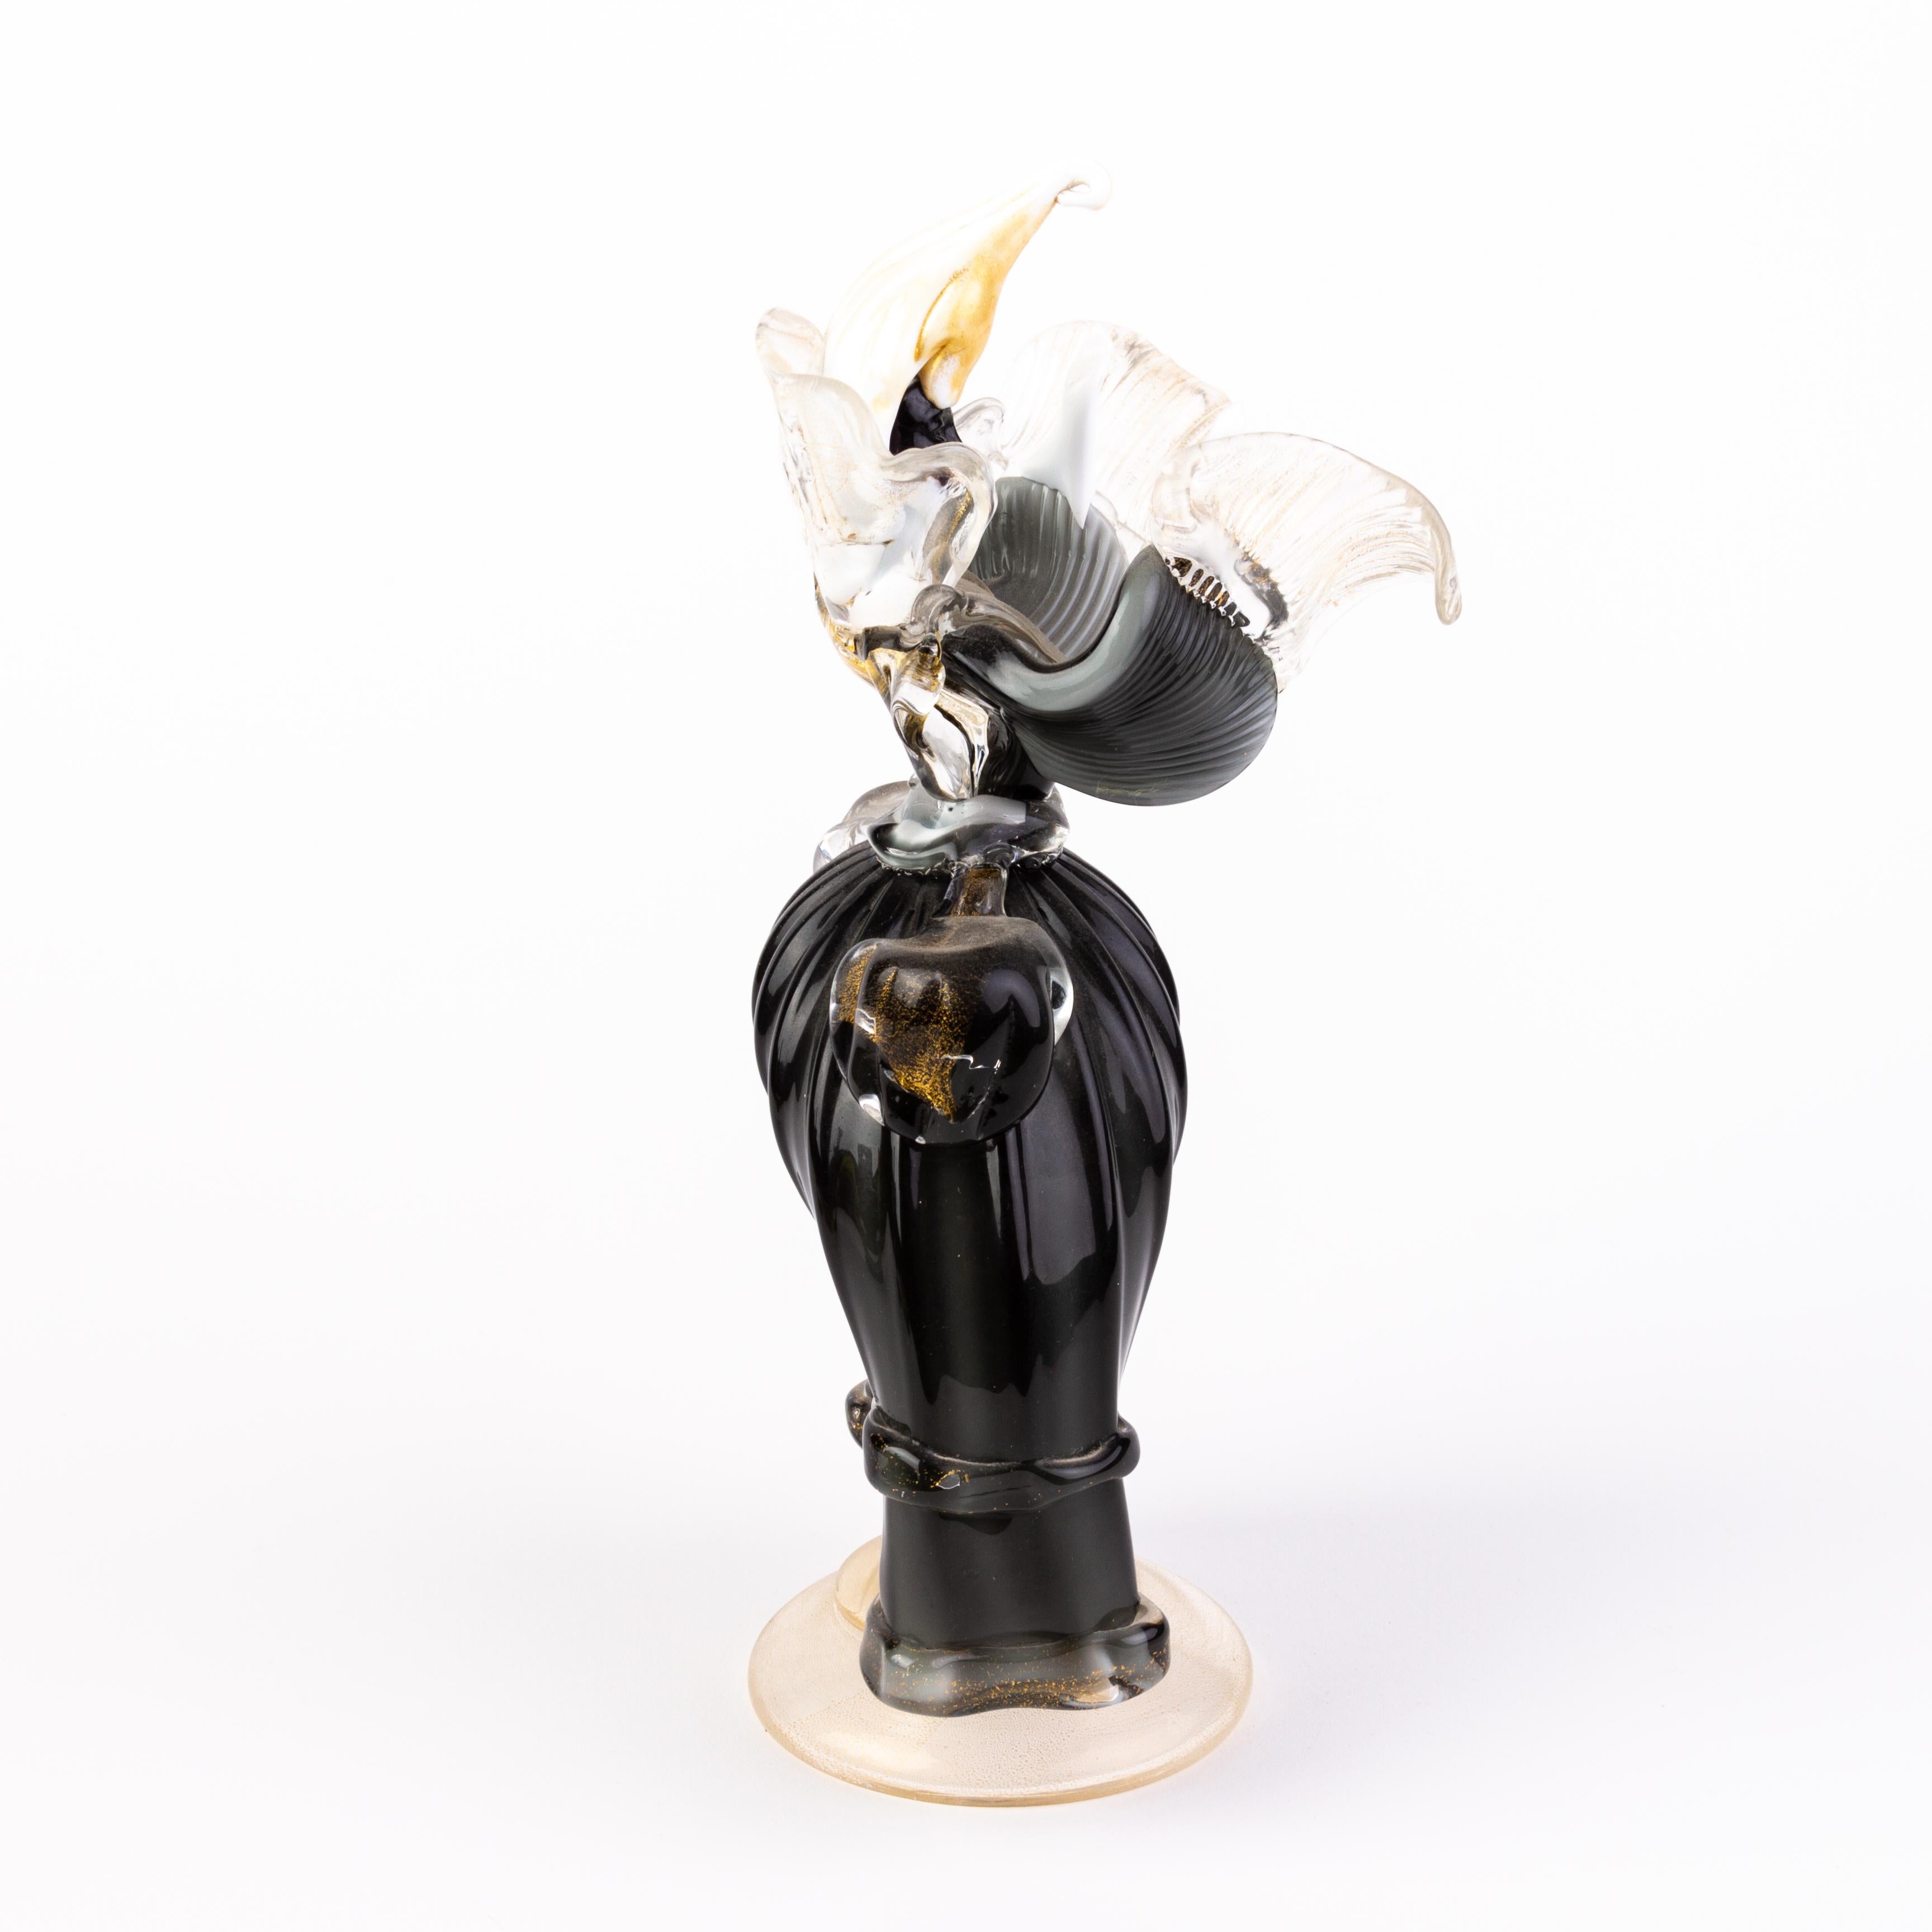 Murano Venetian Glass Sculpture Dancer
Good condition
Free international shipping.